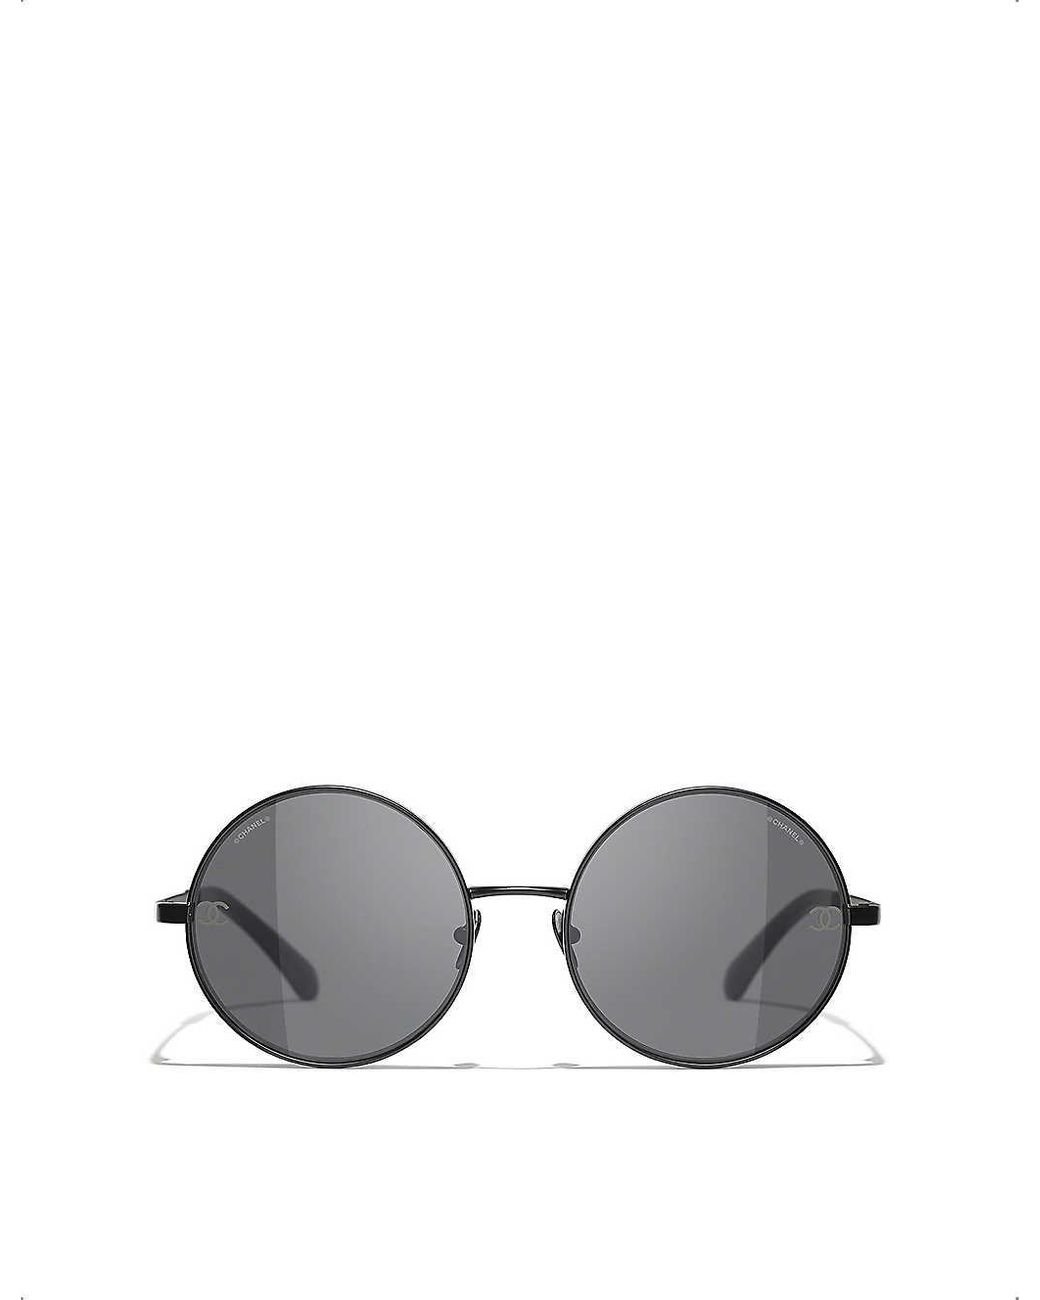 Chanel Round Sunglasses in Gray